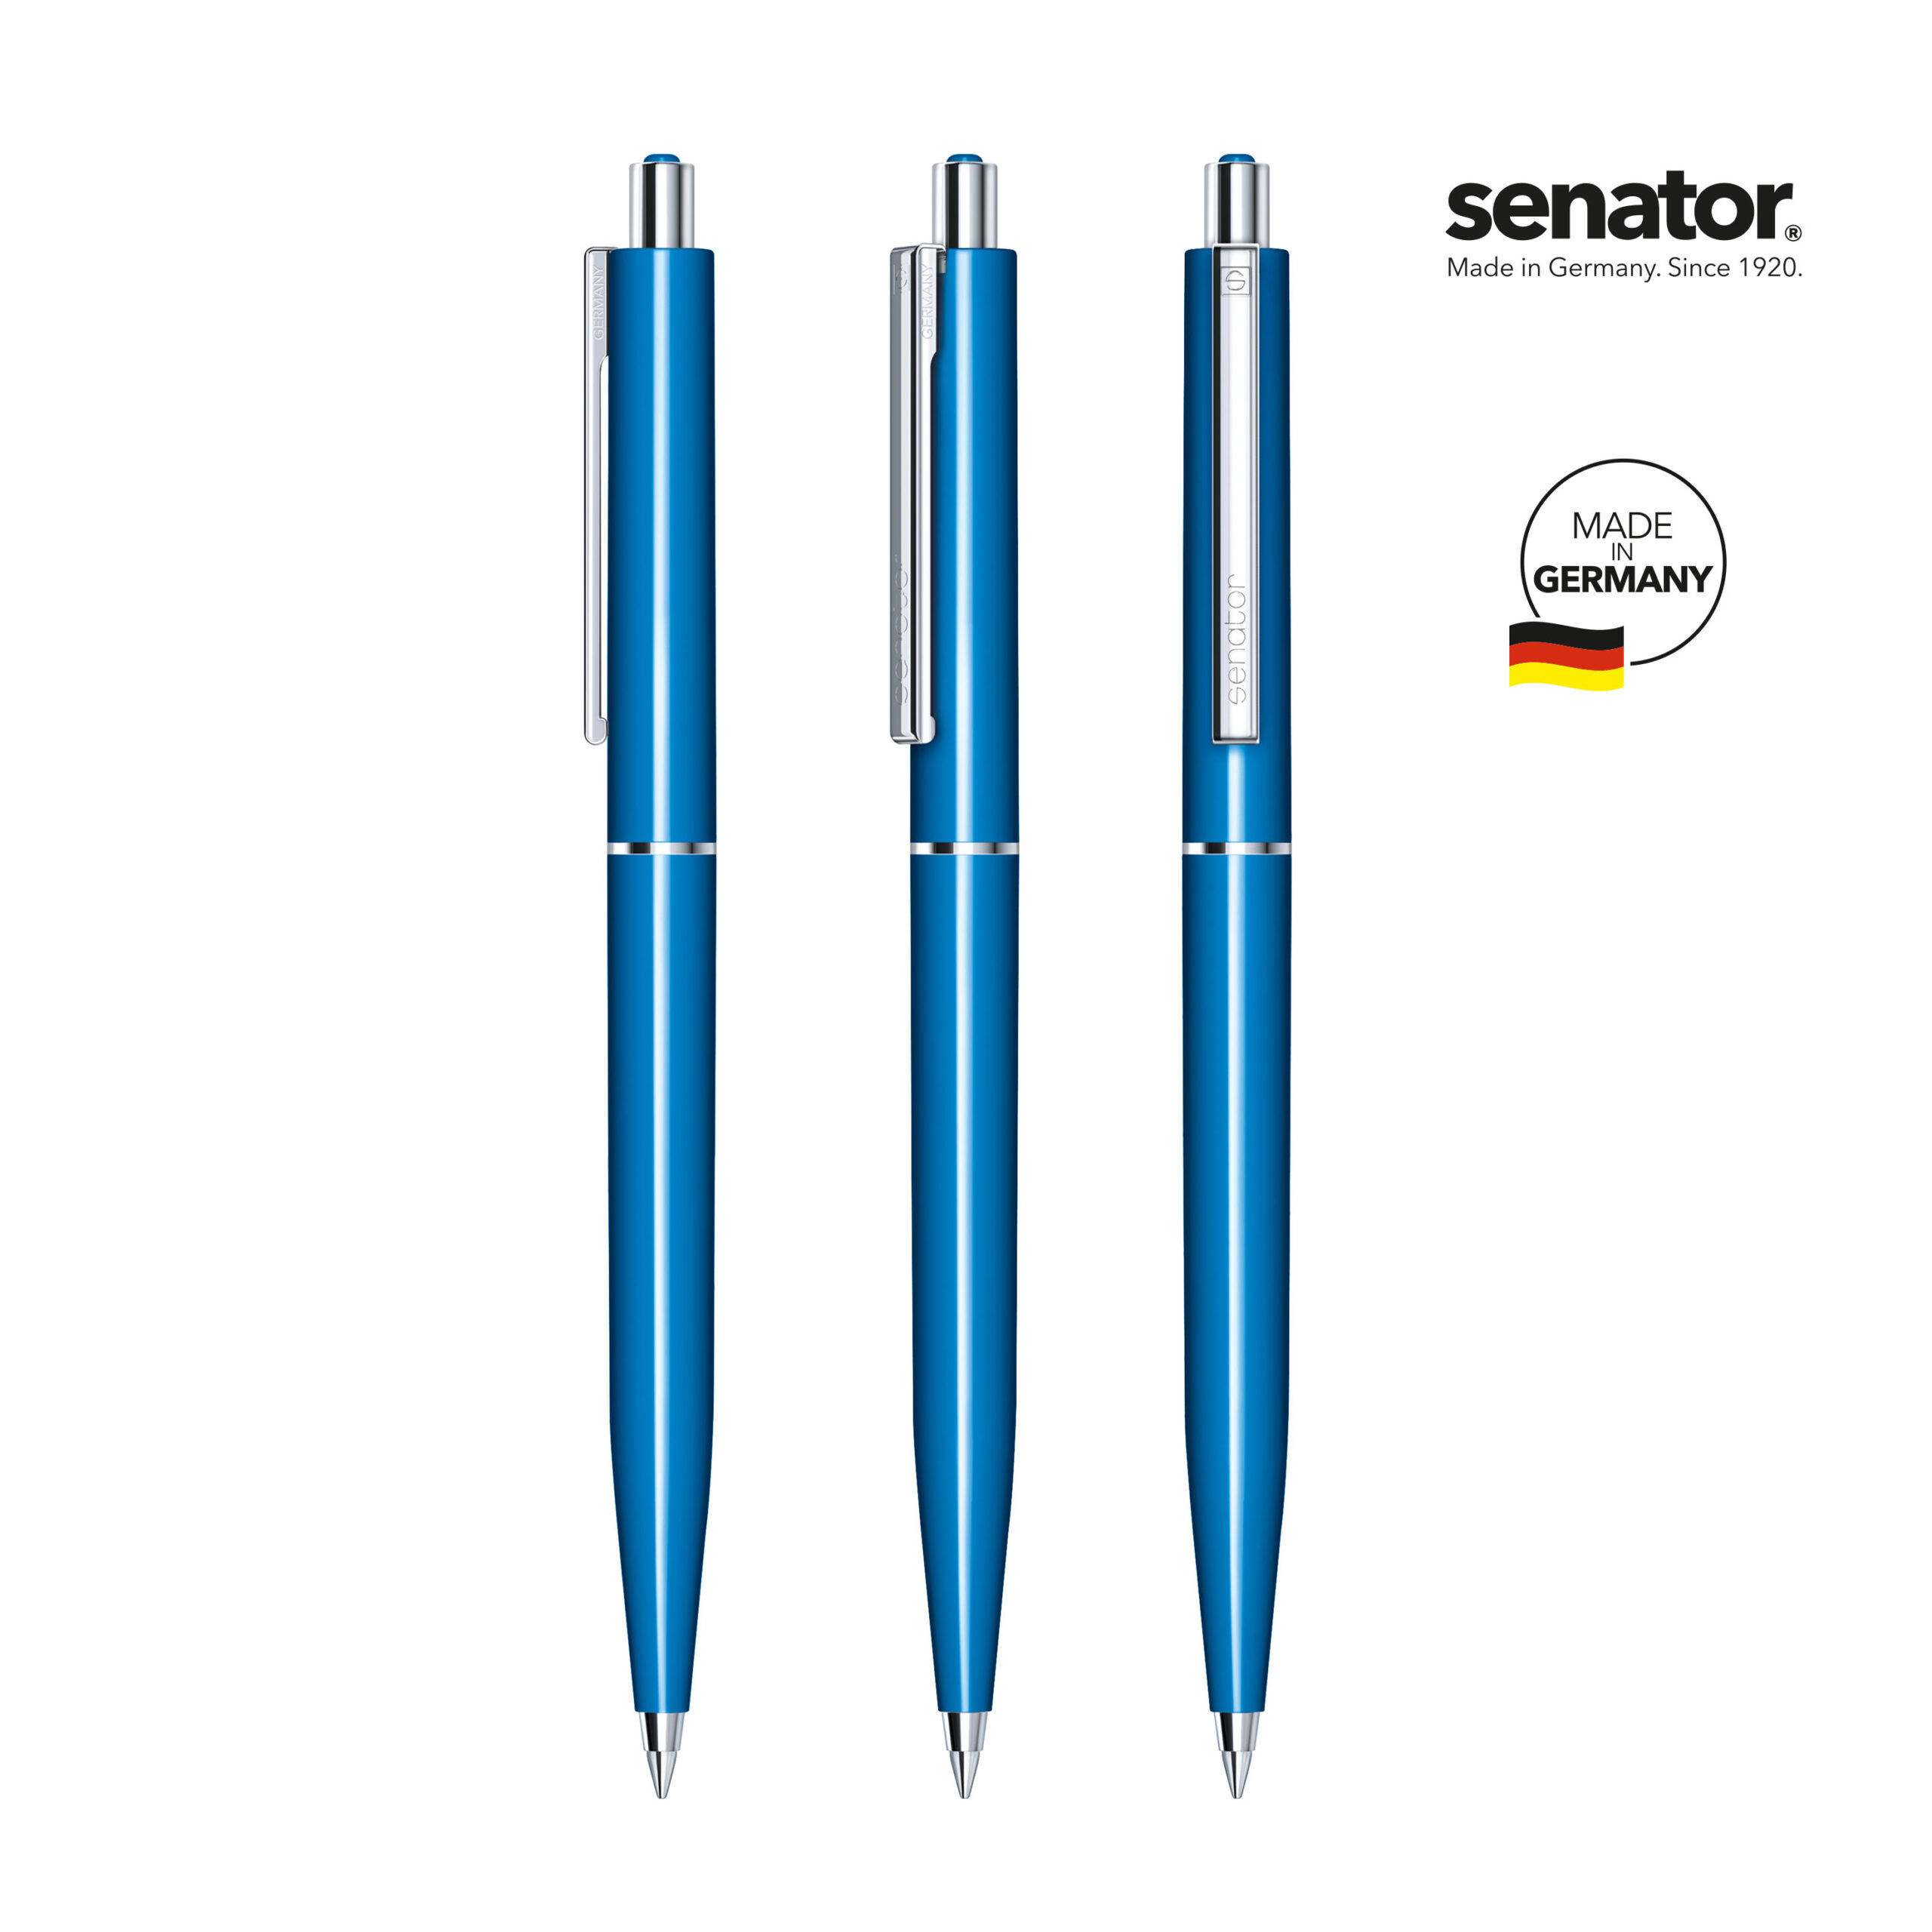 3217-senator-point-polished-pms-2935-5-p